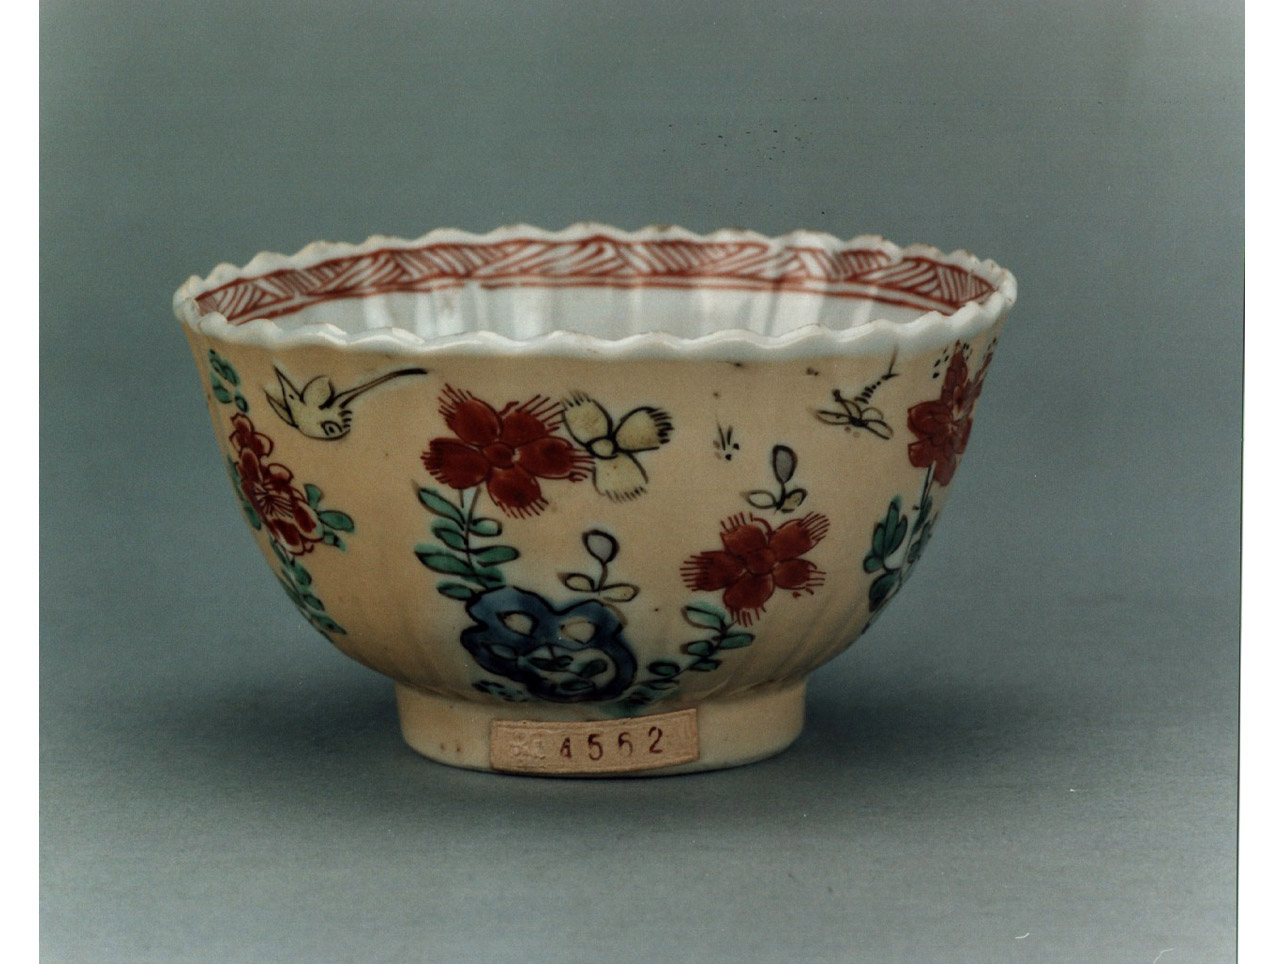 motivi decorativi floreali (tazzina) - manifattura cinese (sec. XVIII)